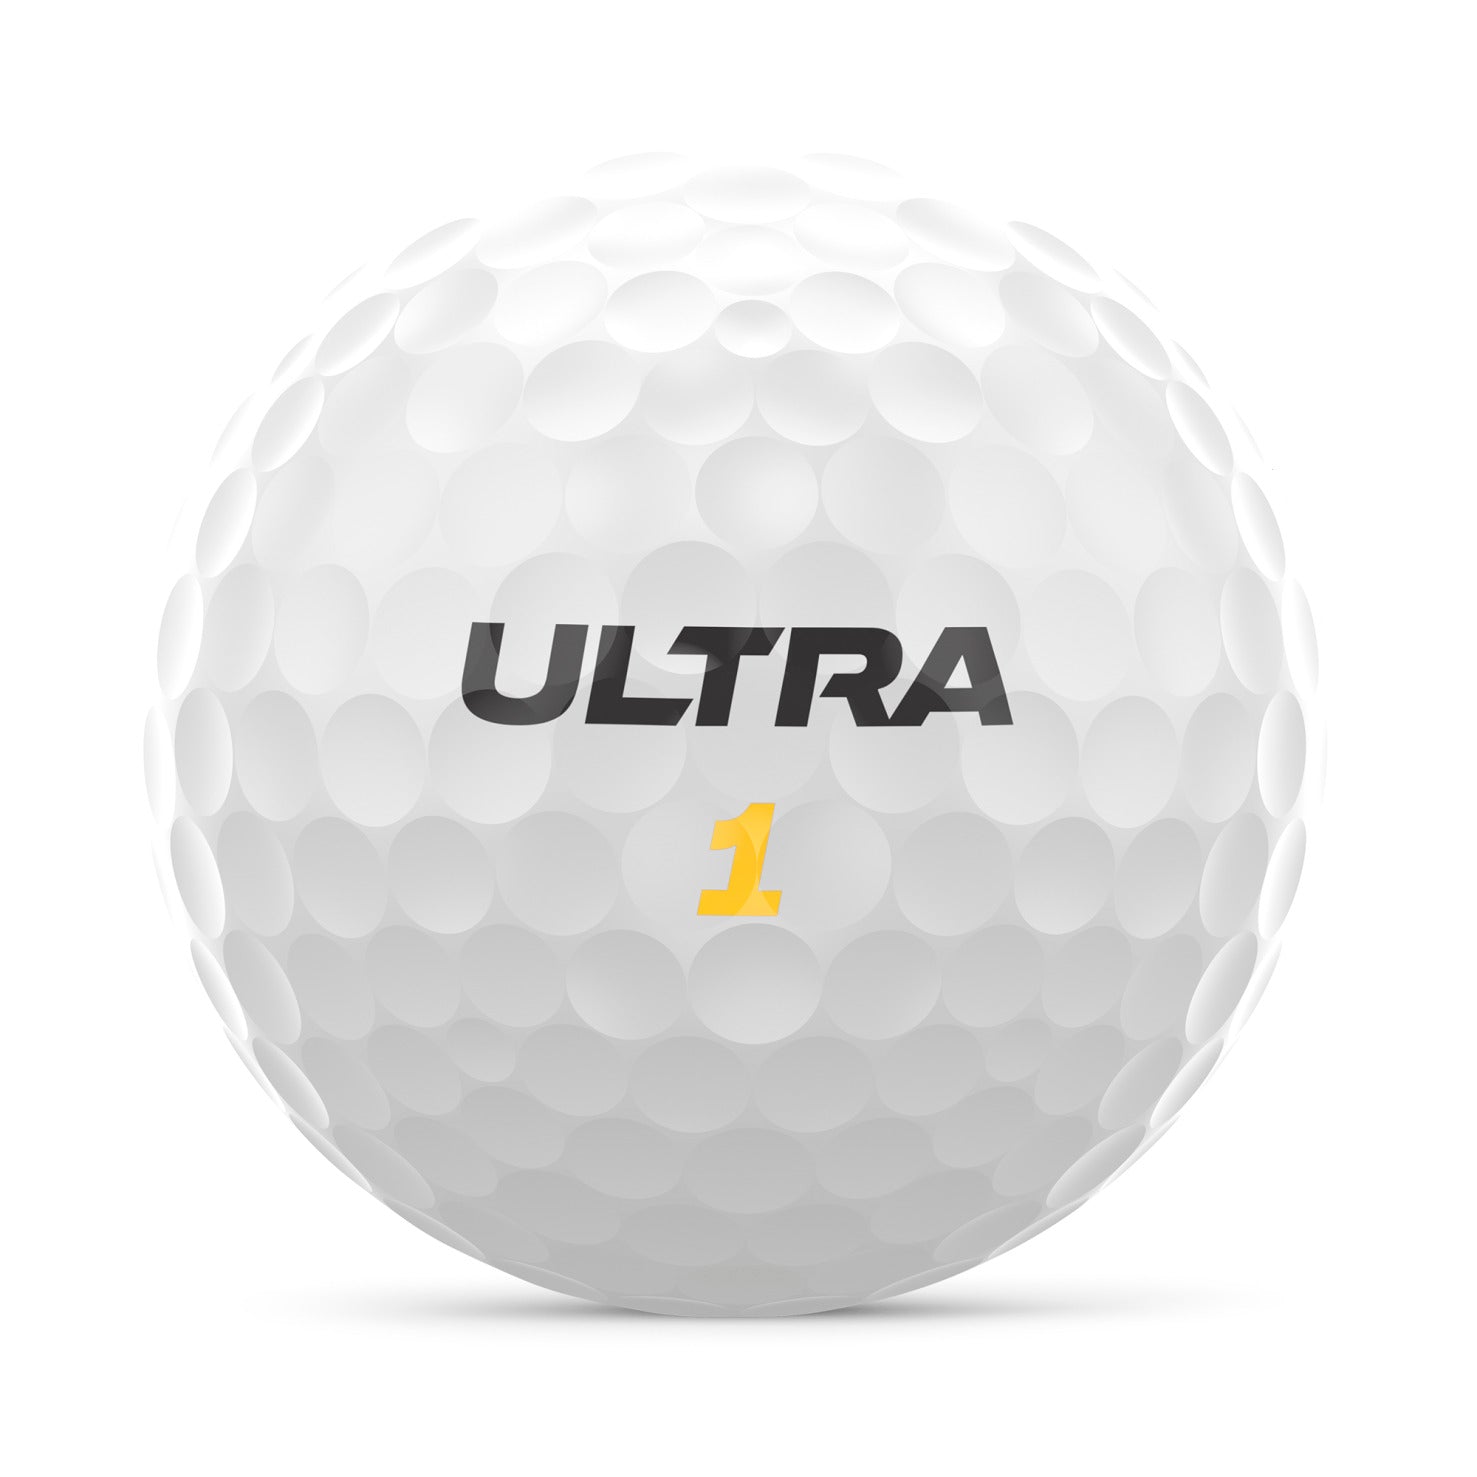 Wilson Ultra Distance Golf Ball, Pack of 15, White